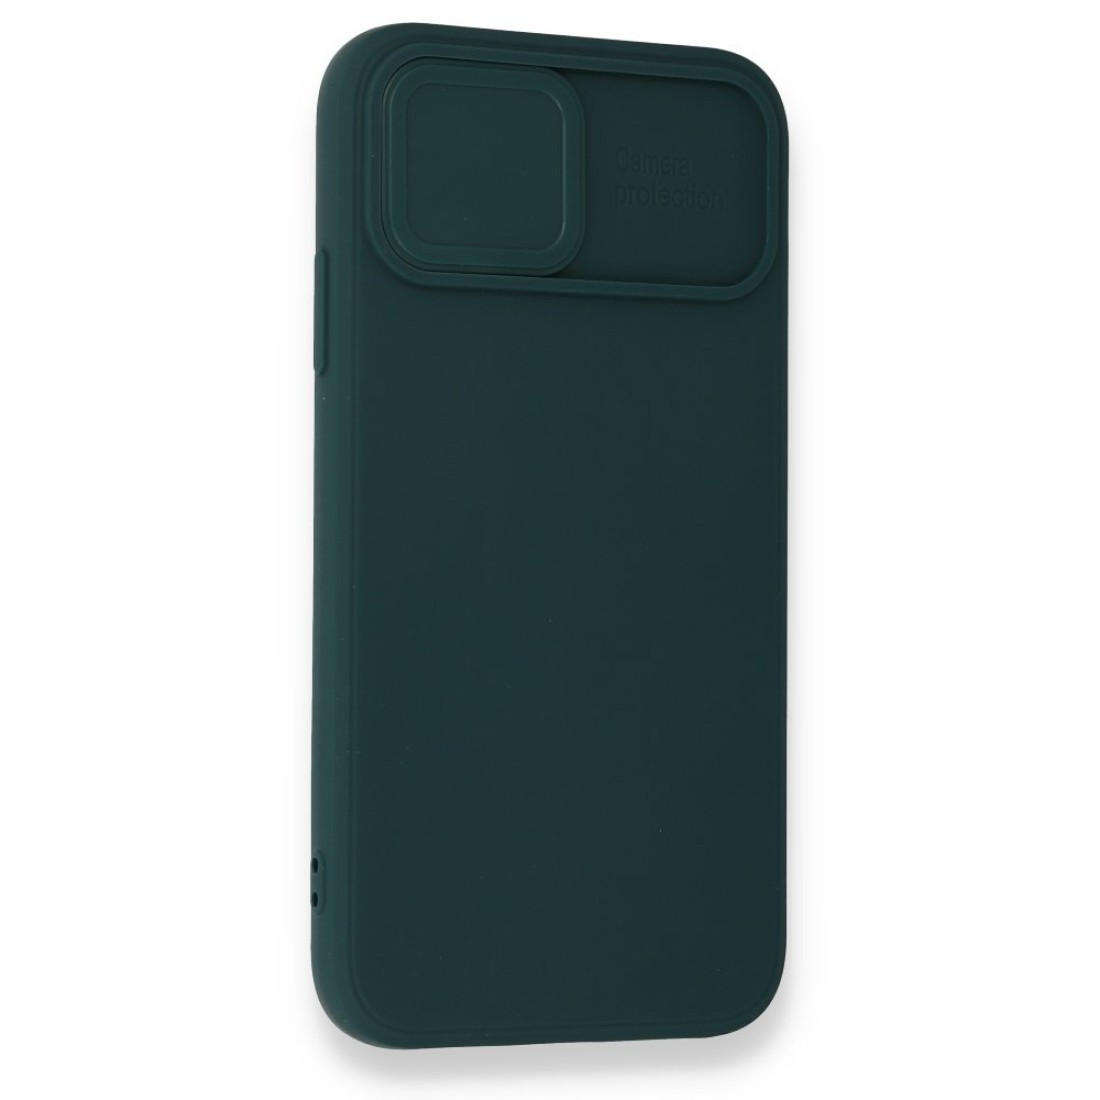 Apple iPhone 12 Mini Kılıf Color Lens Silikon - Yeşil